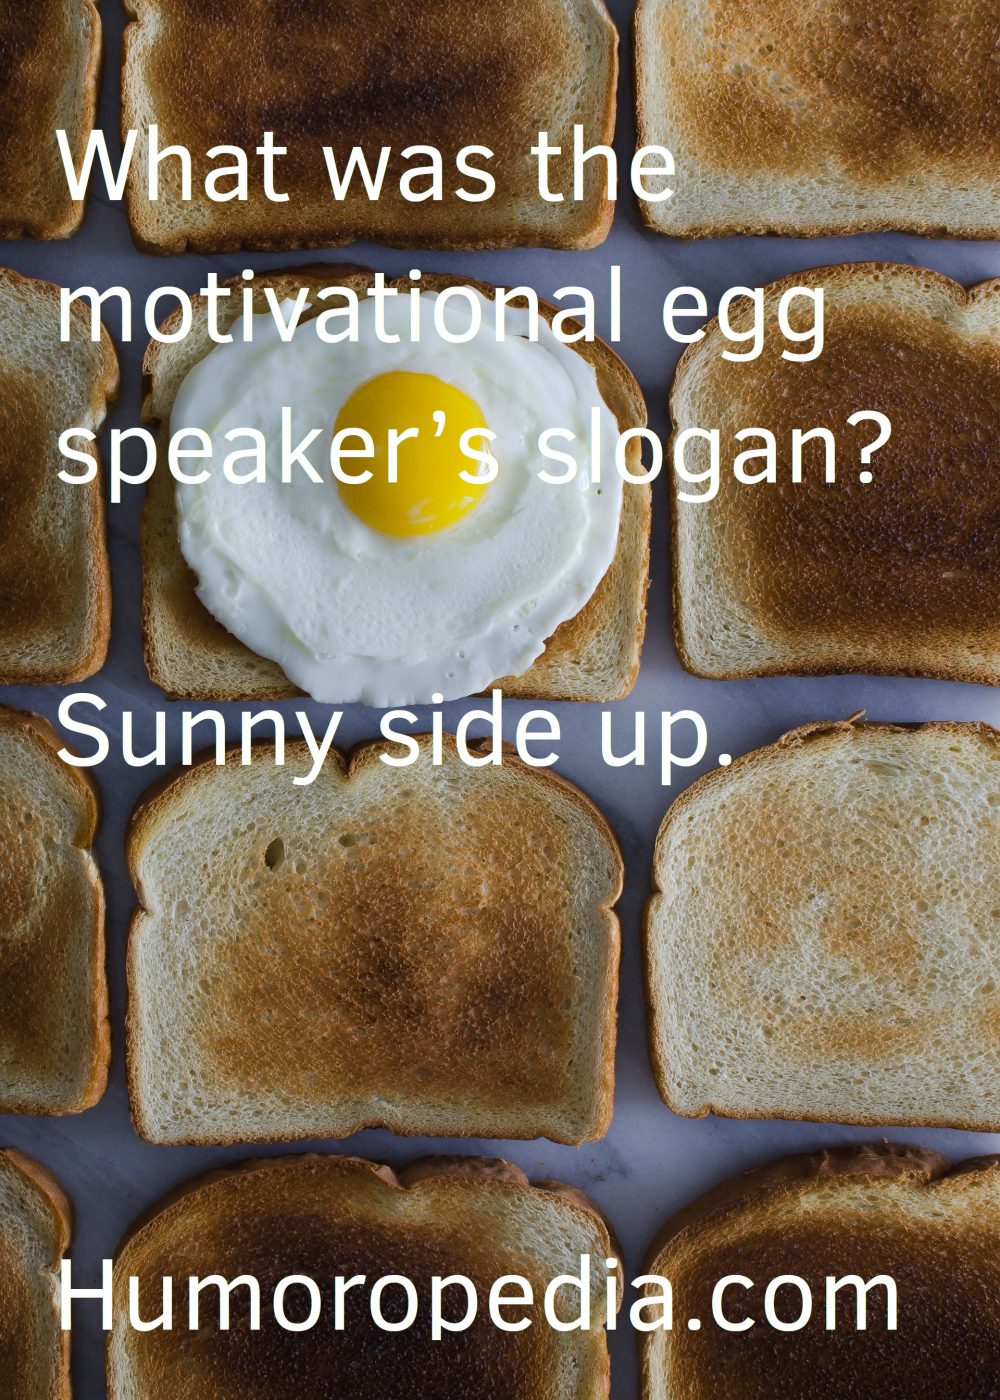 Egg Pun About The Motivational Speaker Slogan